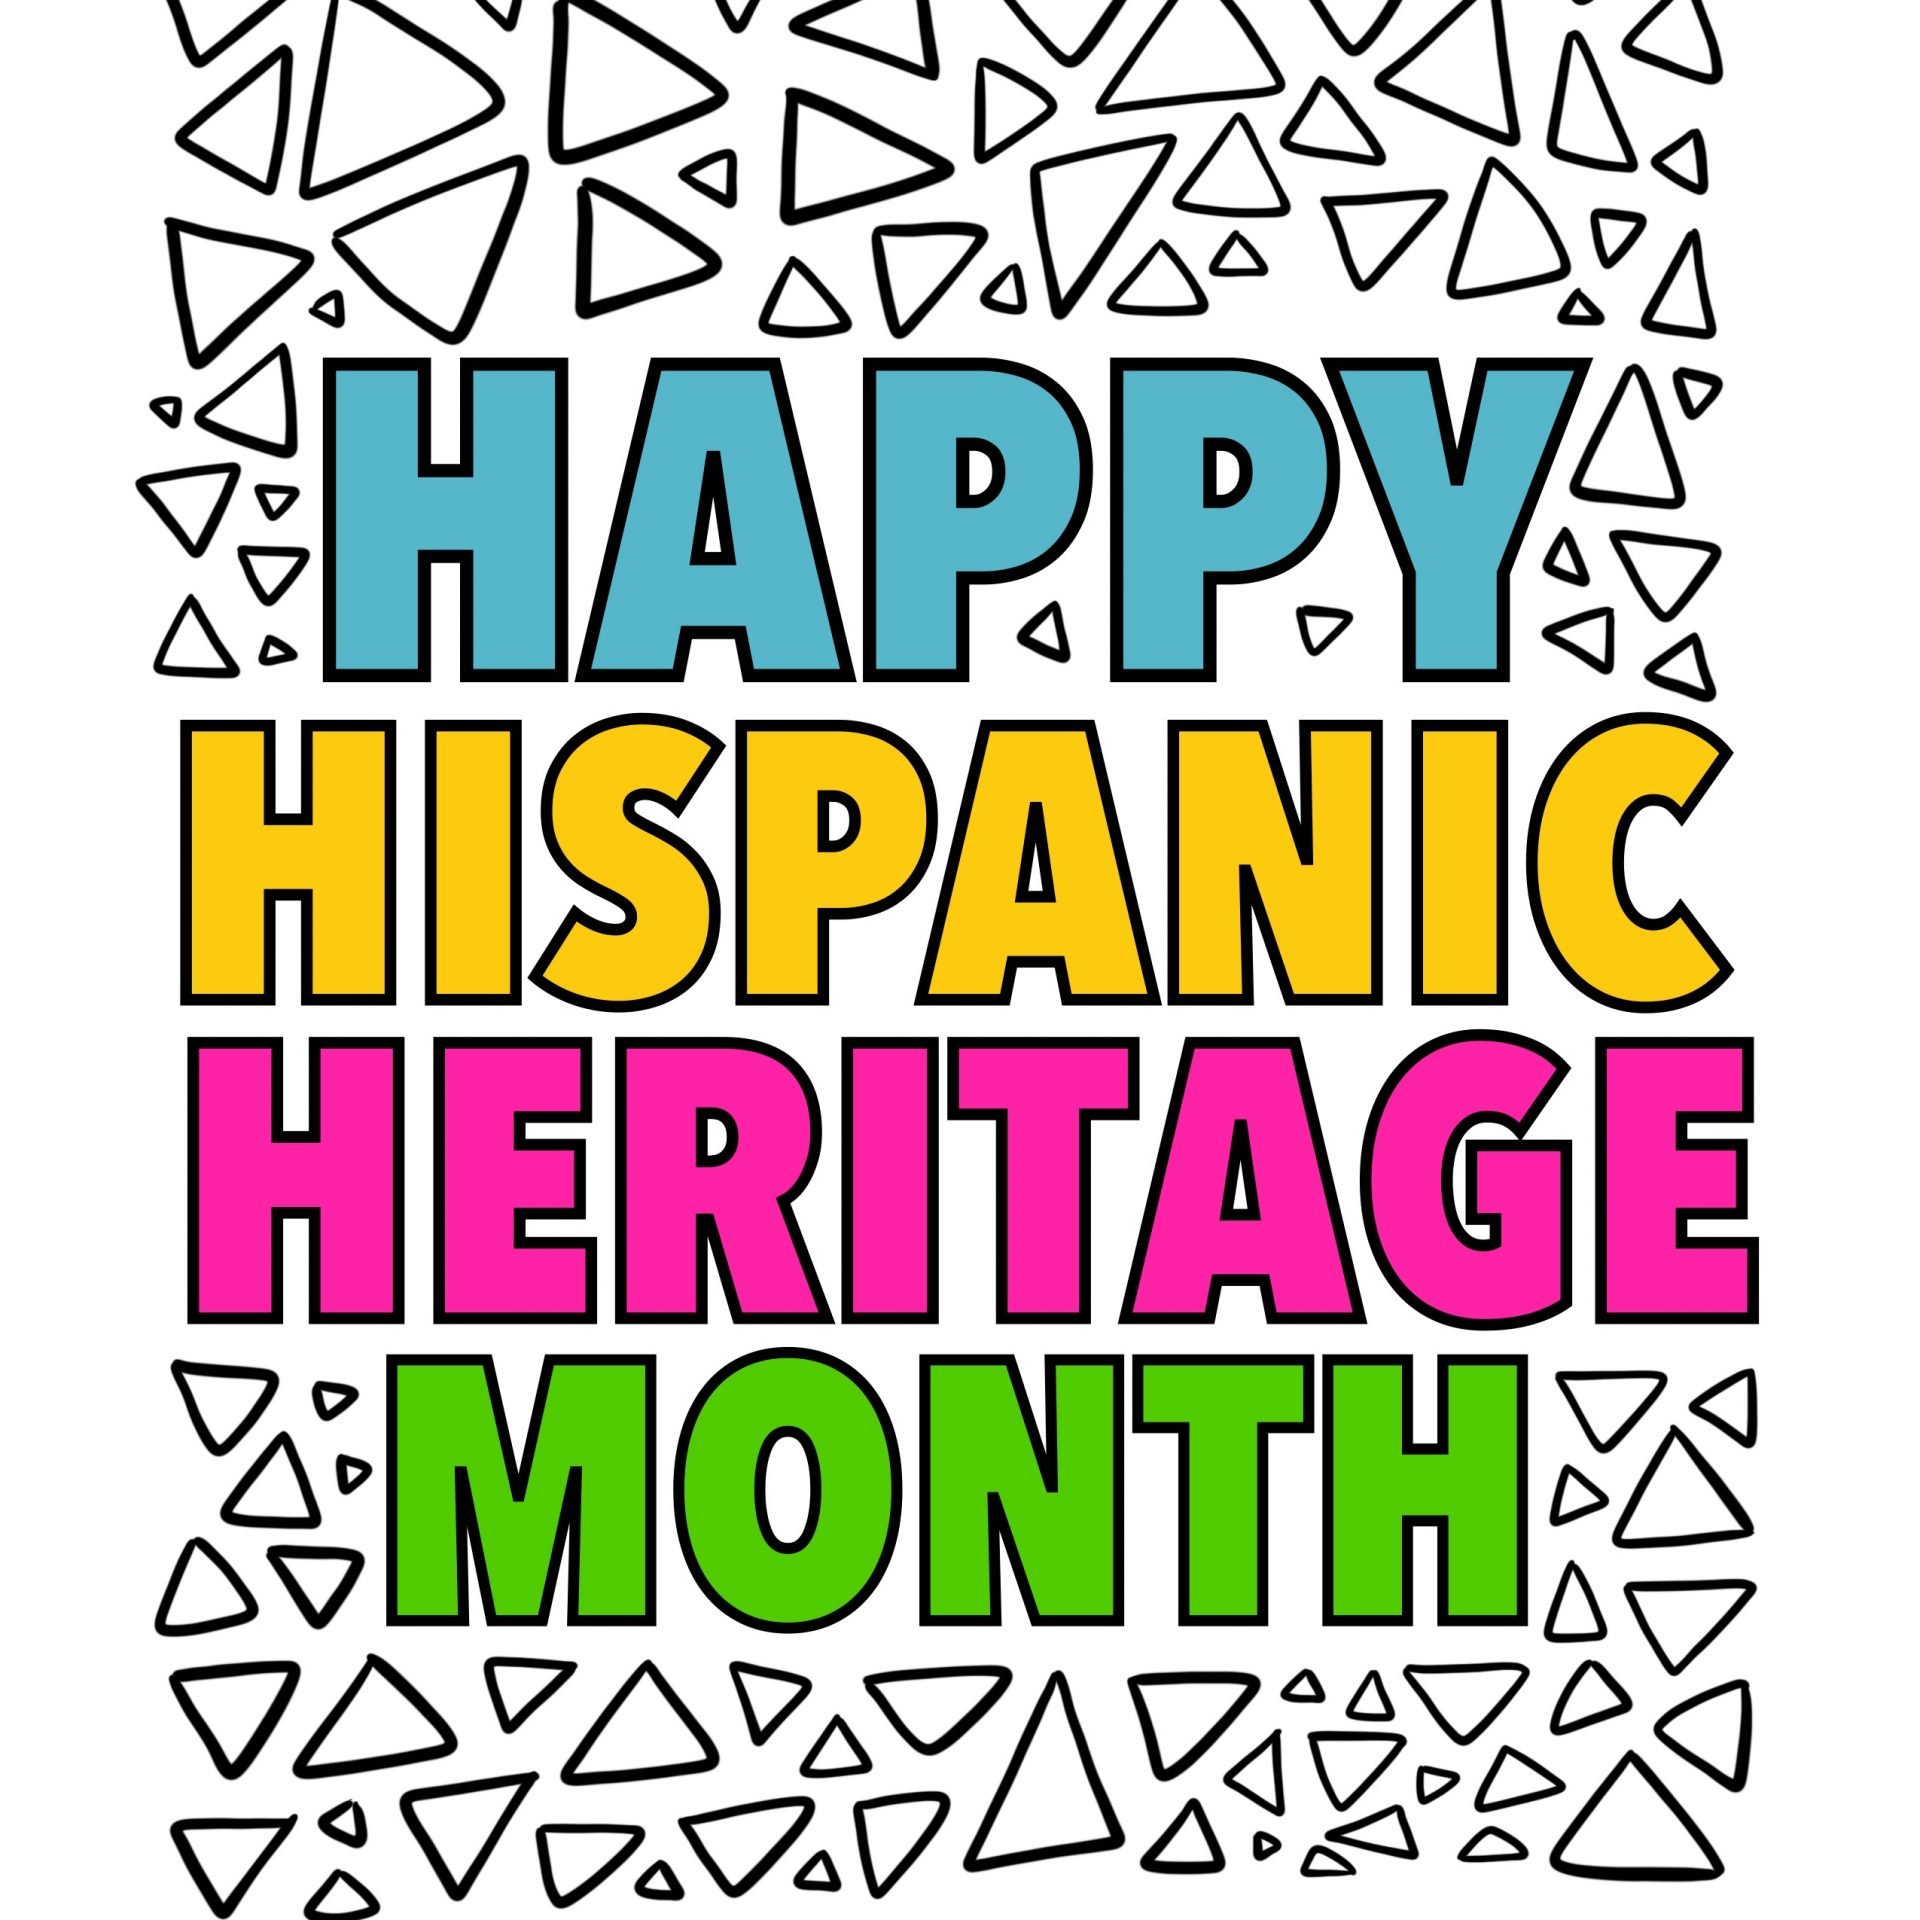 Hispanic heritage month coloring page